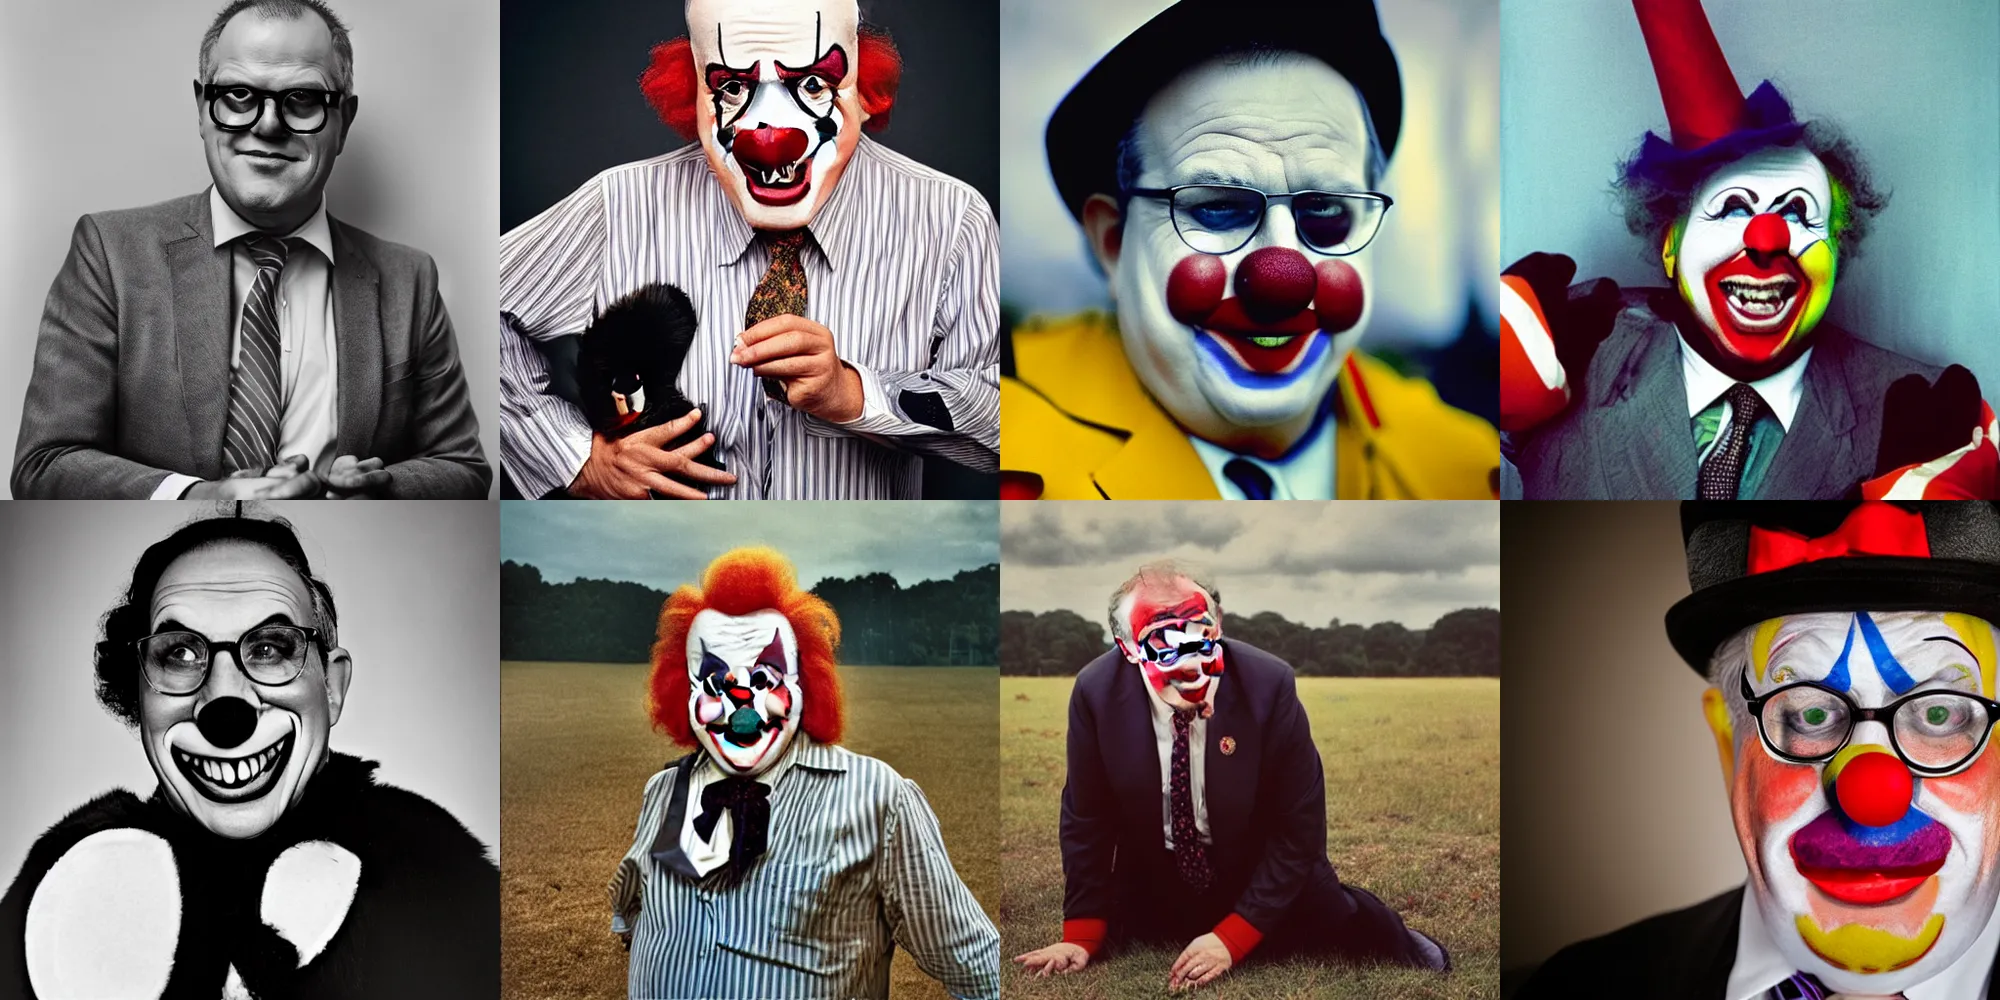 Prompt: Candid portrait photograph of Scott Morrison as a clown, taken by Annie Leibovitz